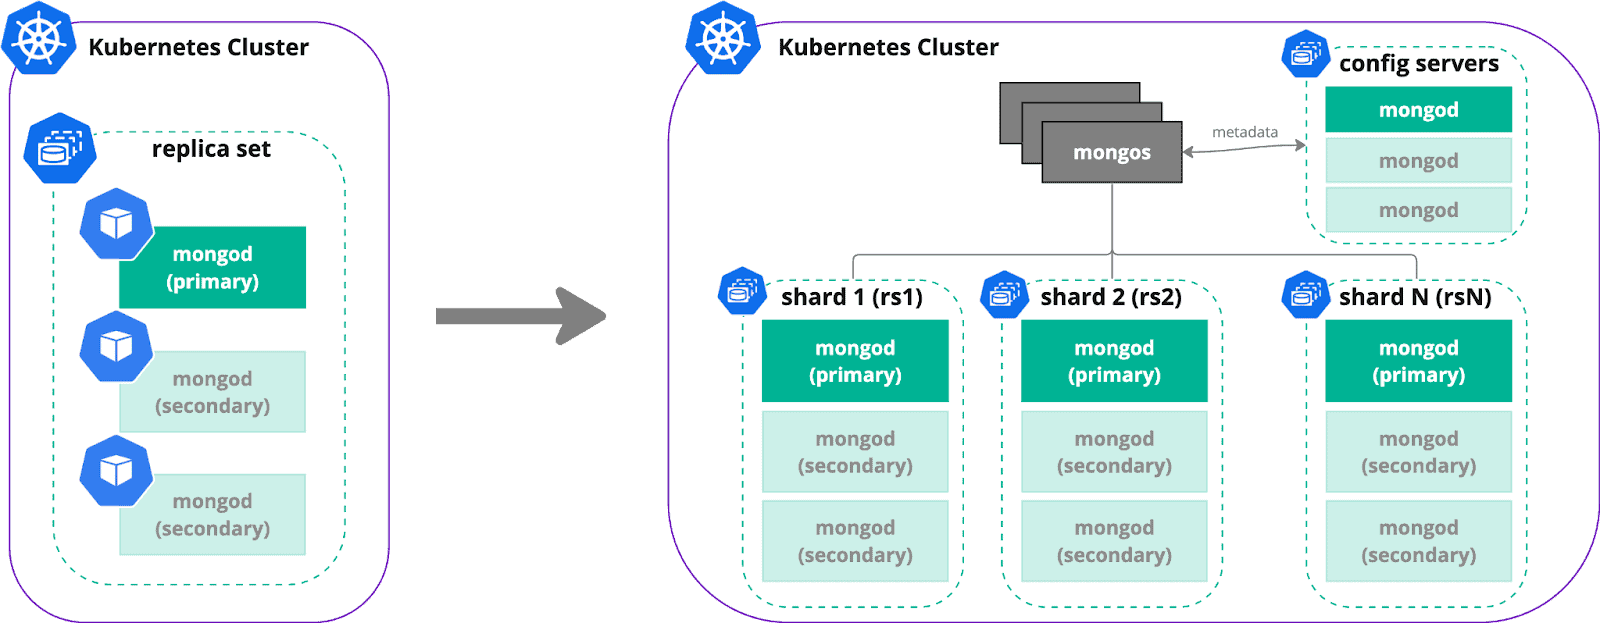 Diagram flow showing Kubernetes Cluster replica set to Kubernetes Cluster sharding